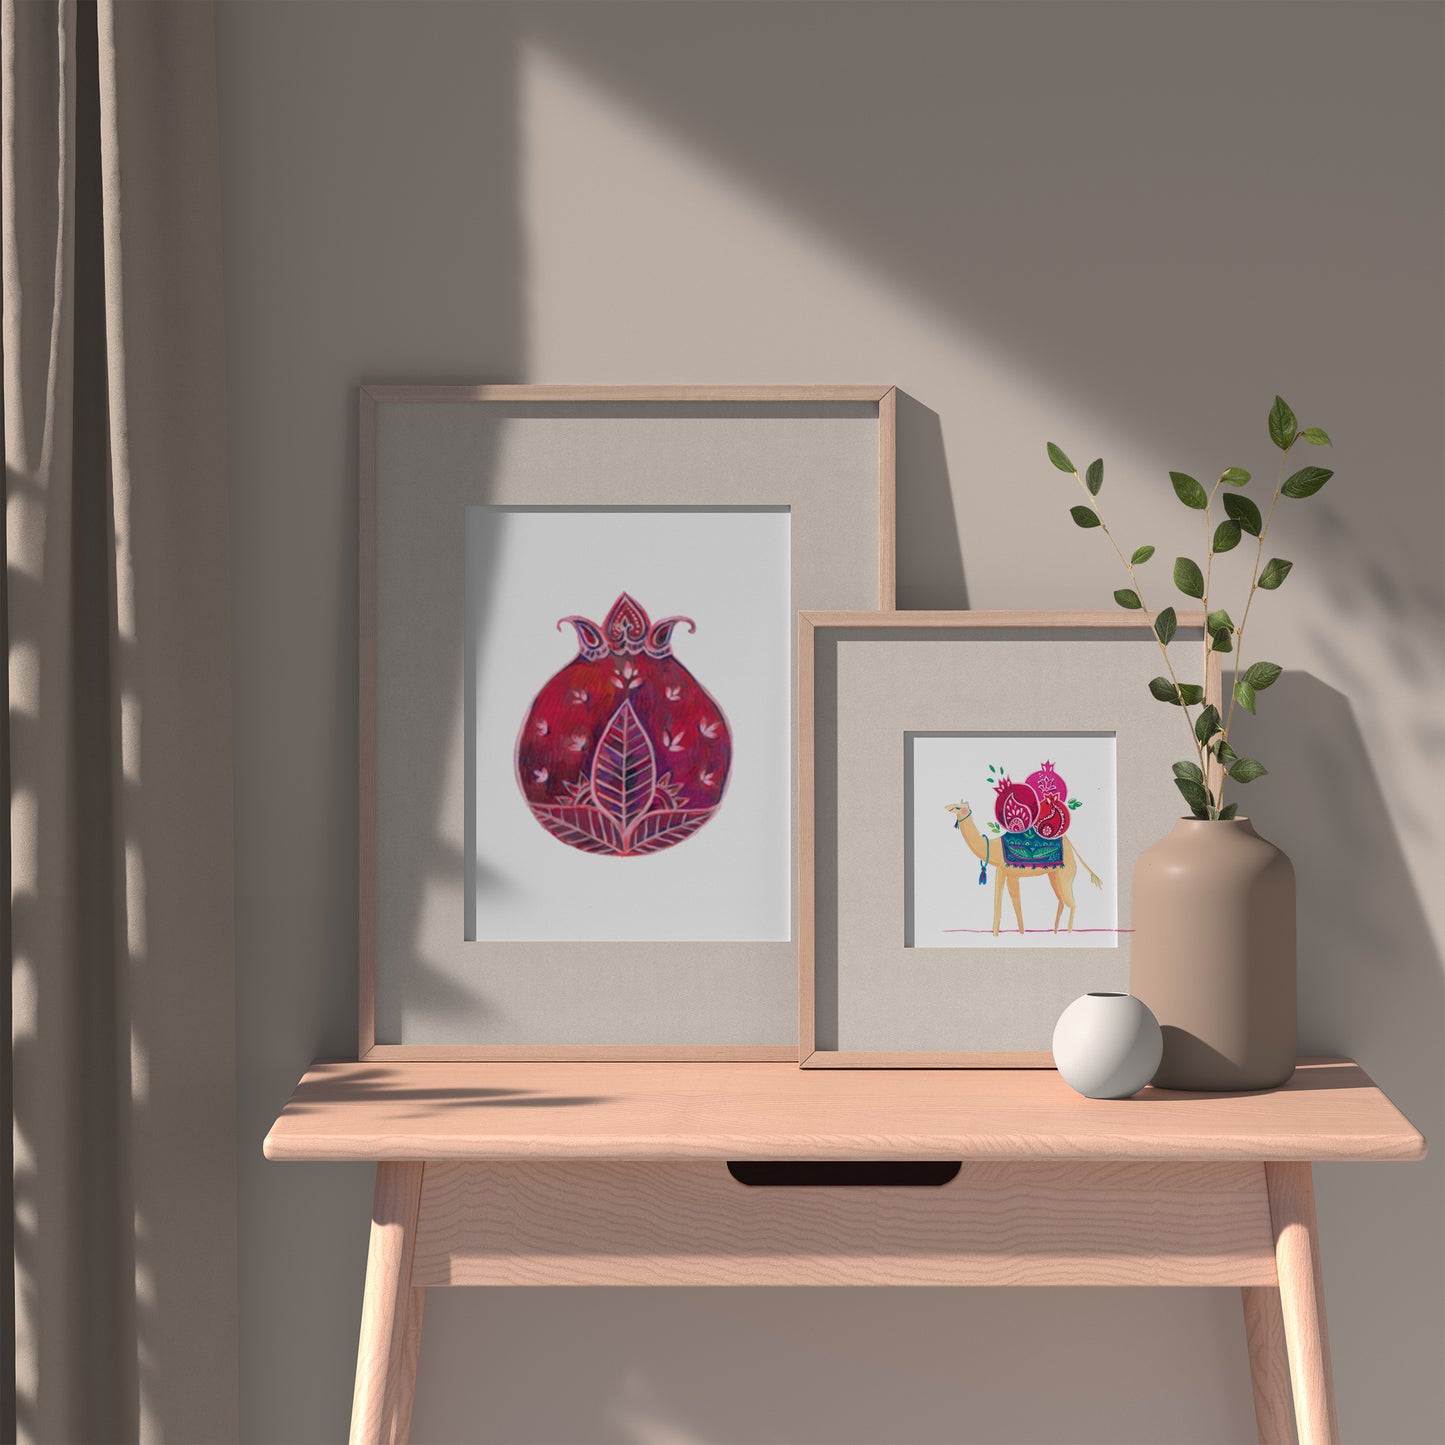 Pomegranate Illustration, 2 Illustrations of Pomegranate